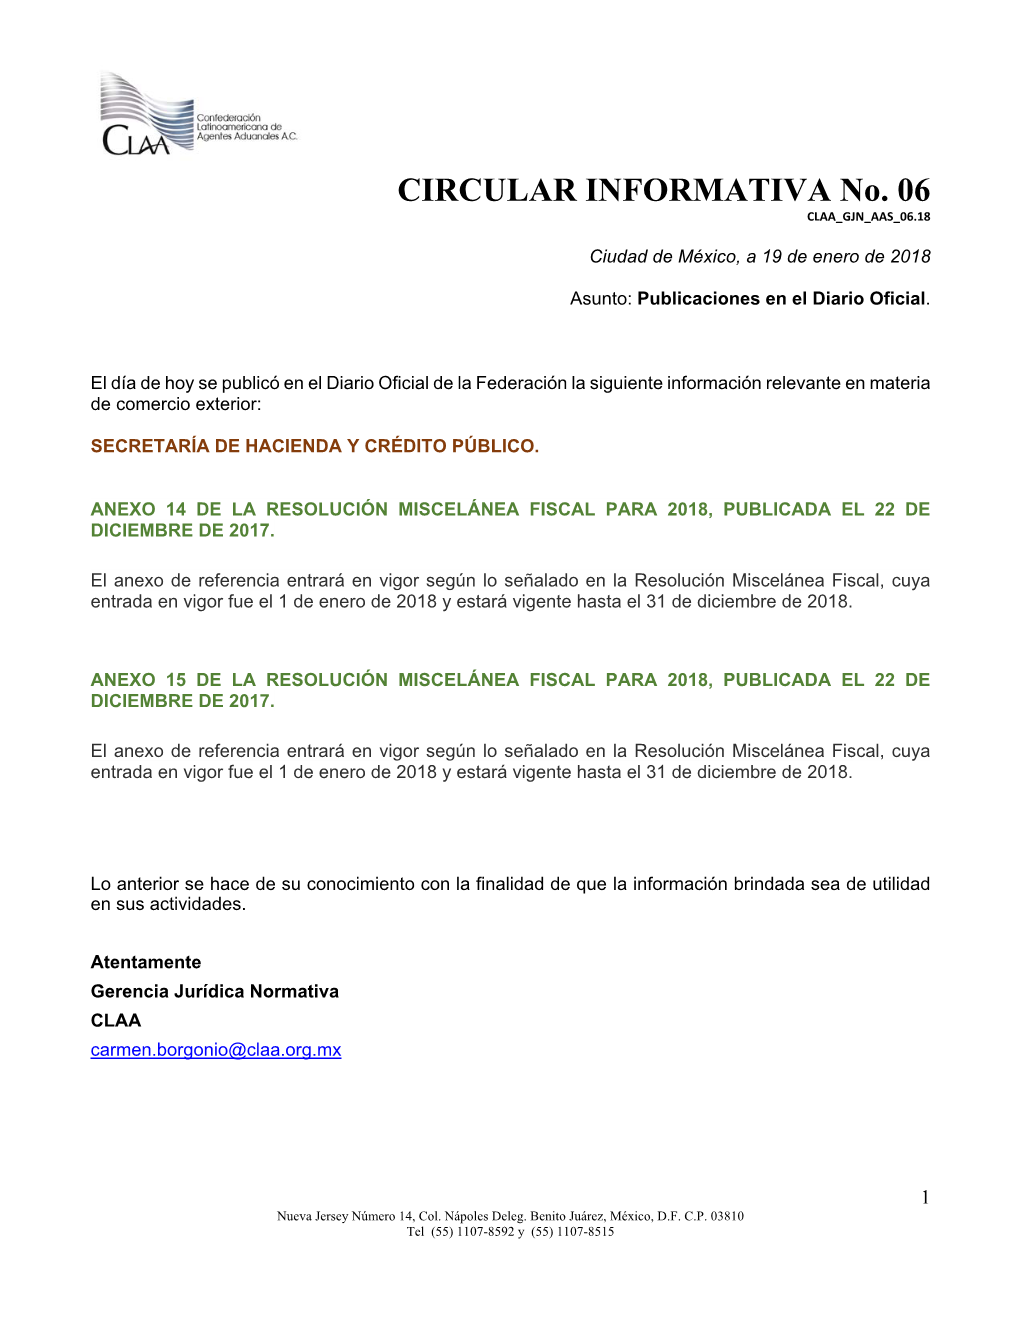 CIRCULAR INFORMATIVA No. 06 CLAA GJN AAS 06.18